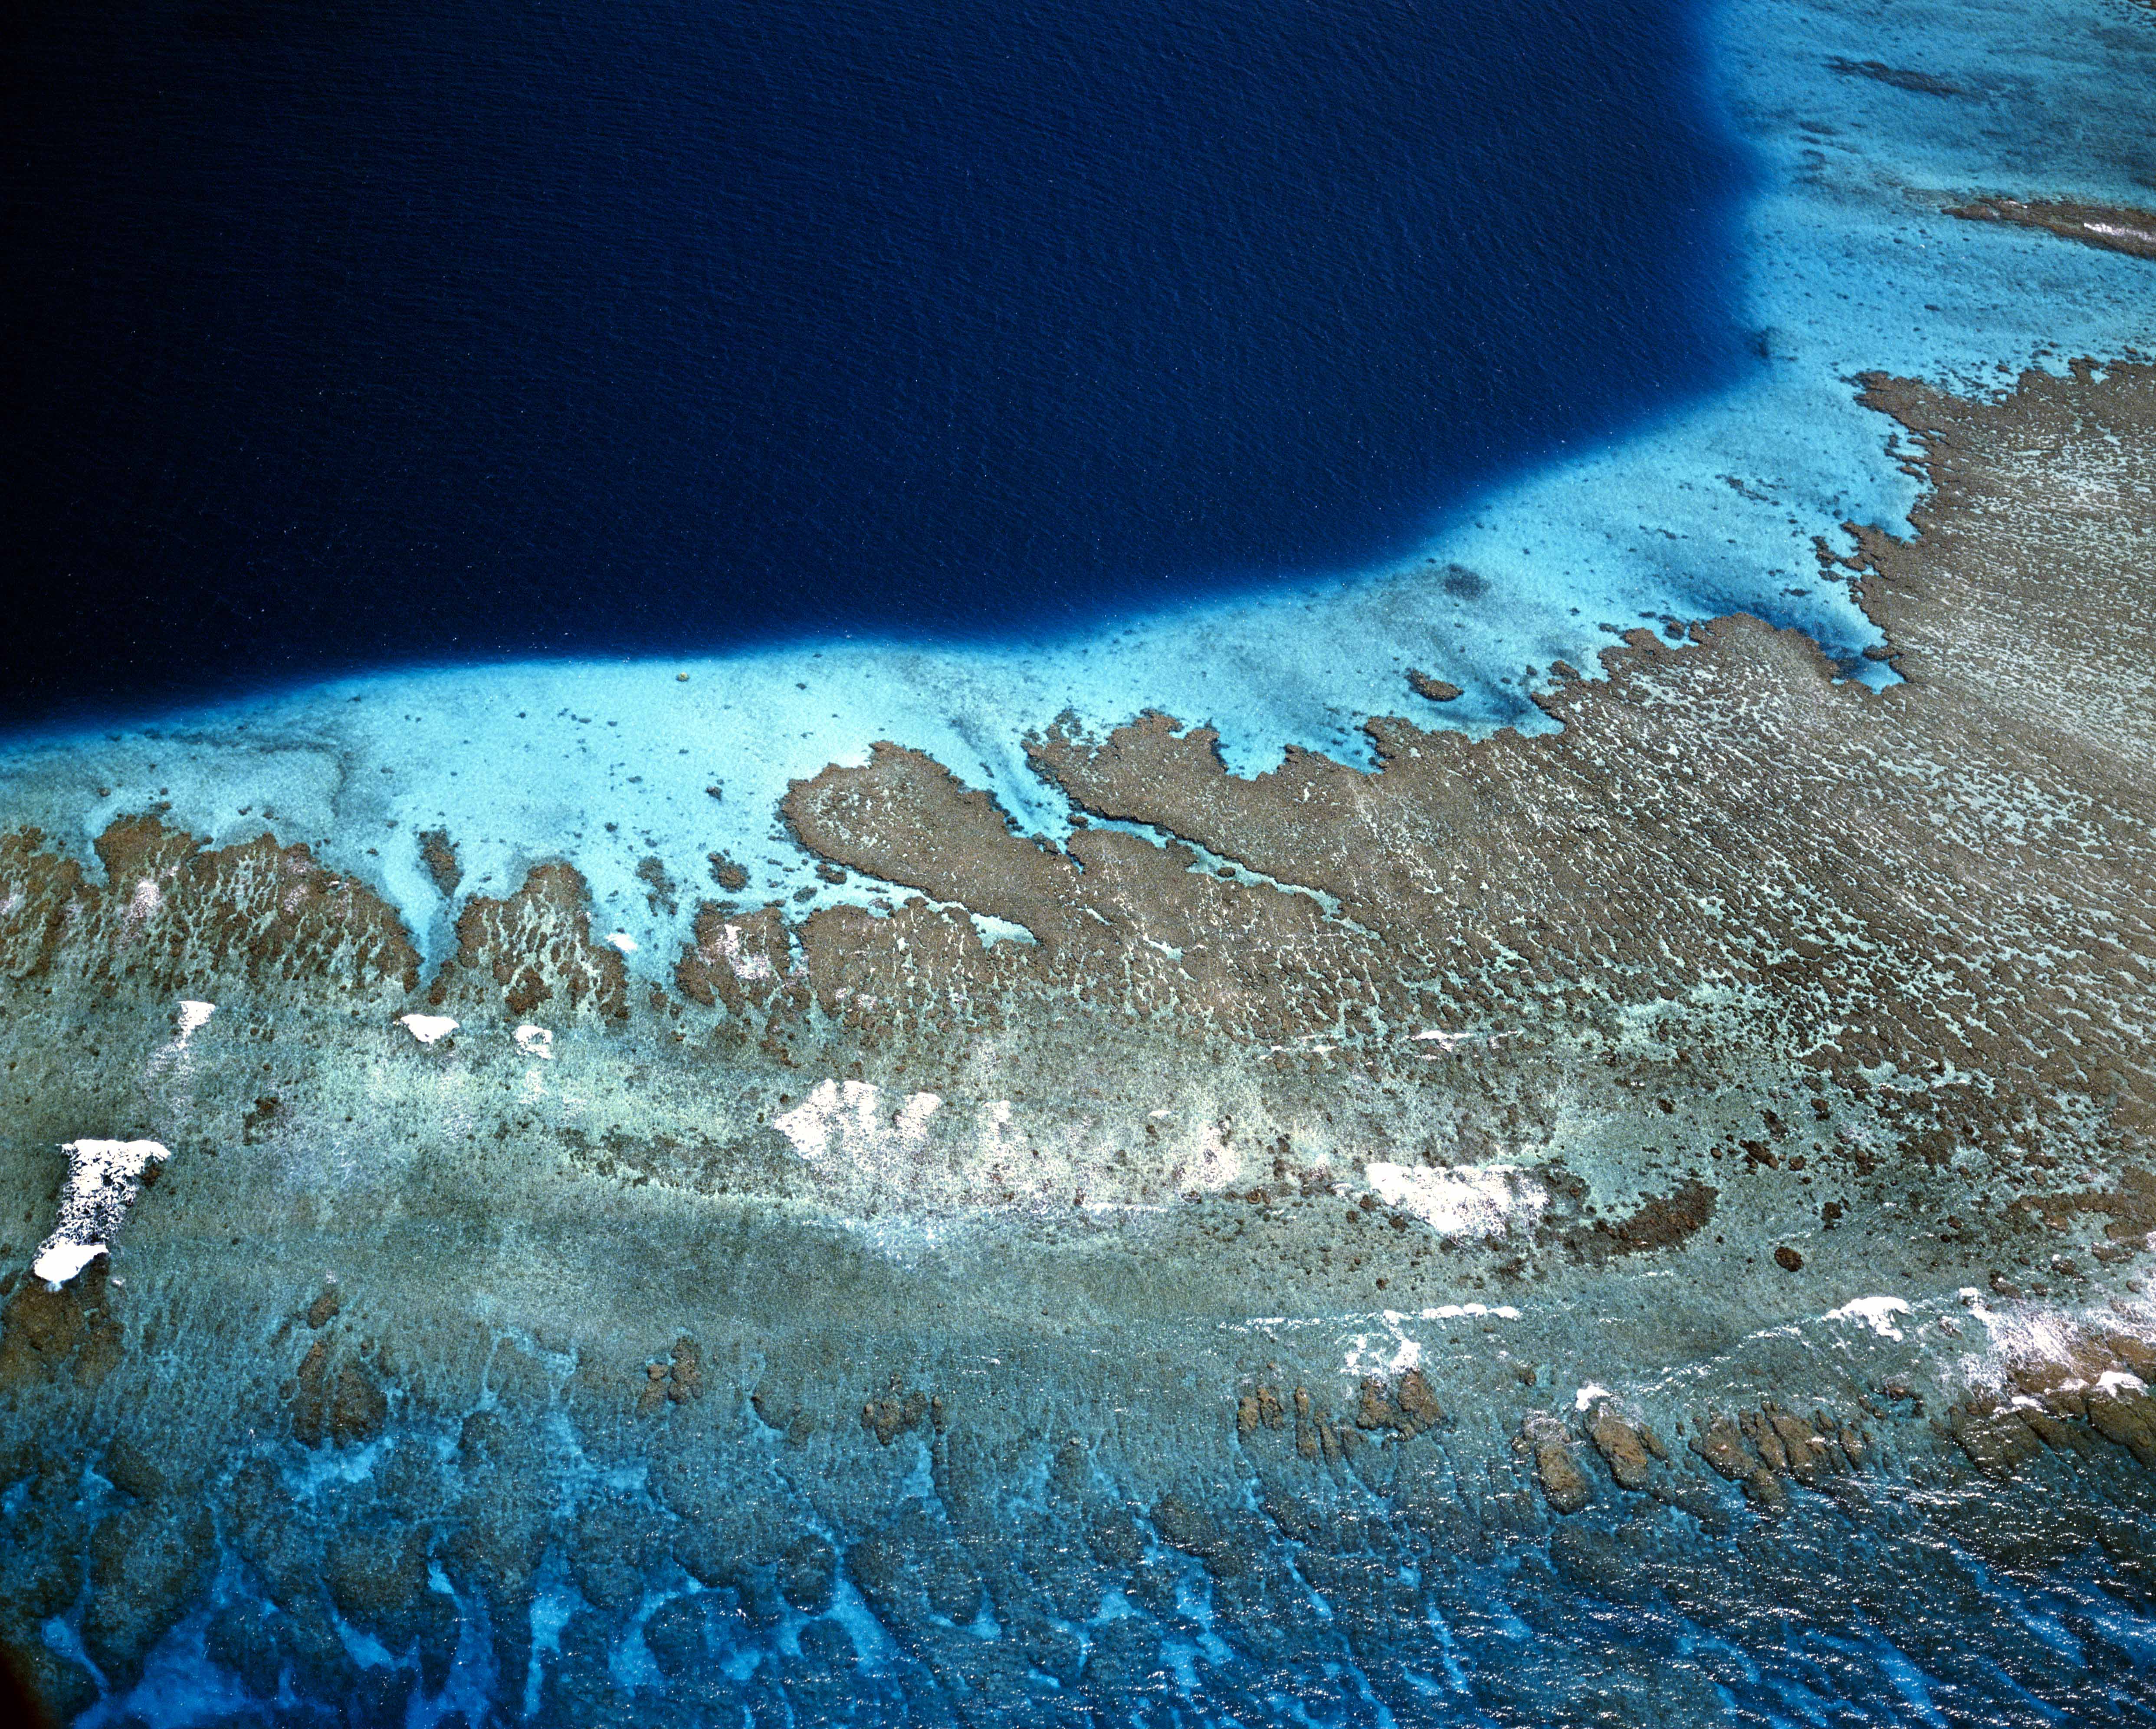 Photo: Fiji. Global Environment Facility, Flickr 